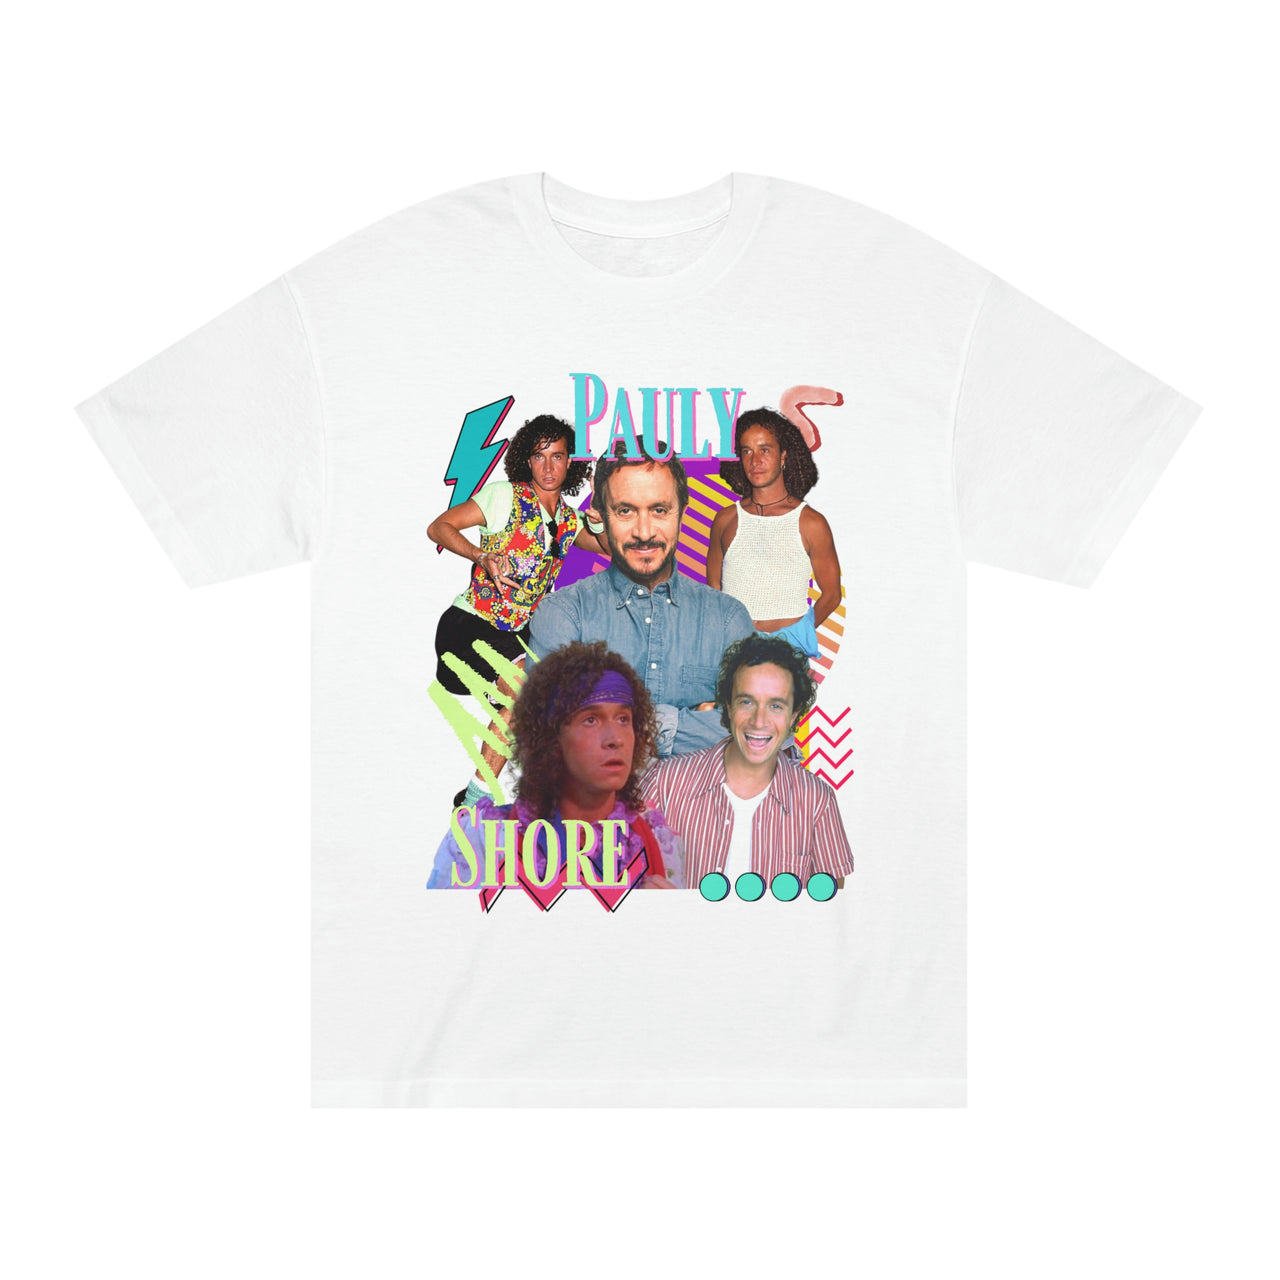 Pauly Shore Shirt, Vintage Style Bootleg Comedy Fan Gift TShirt, 90s Aesthetic Tee